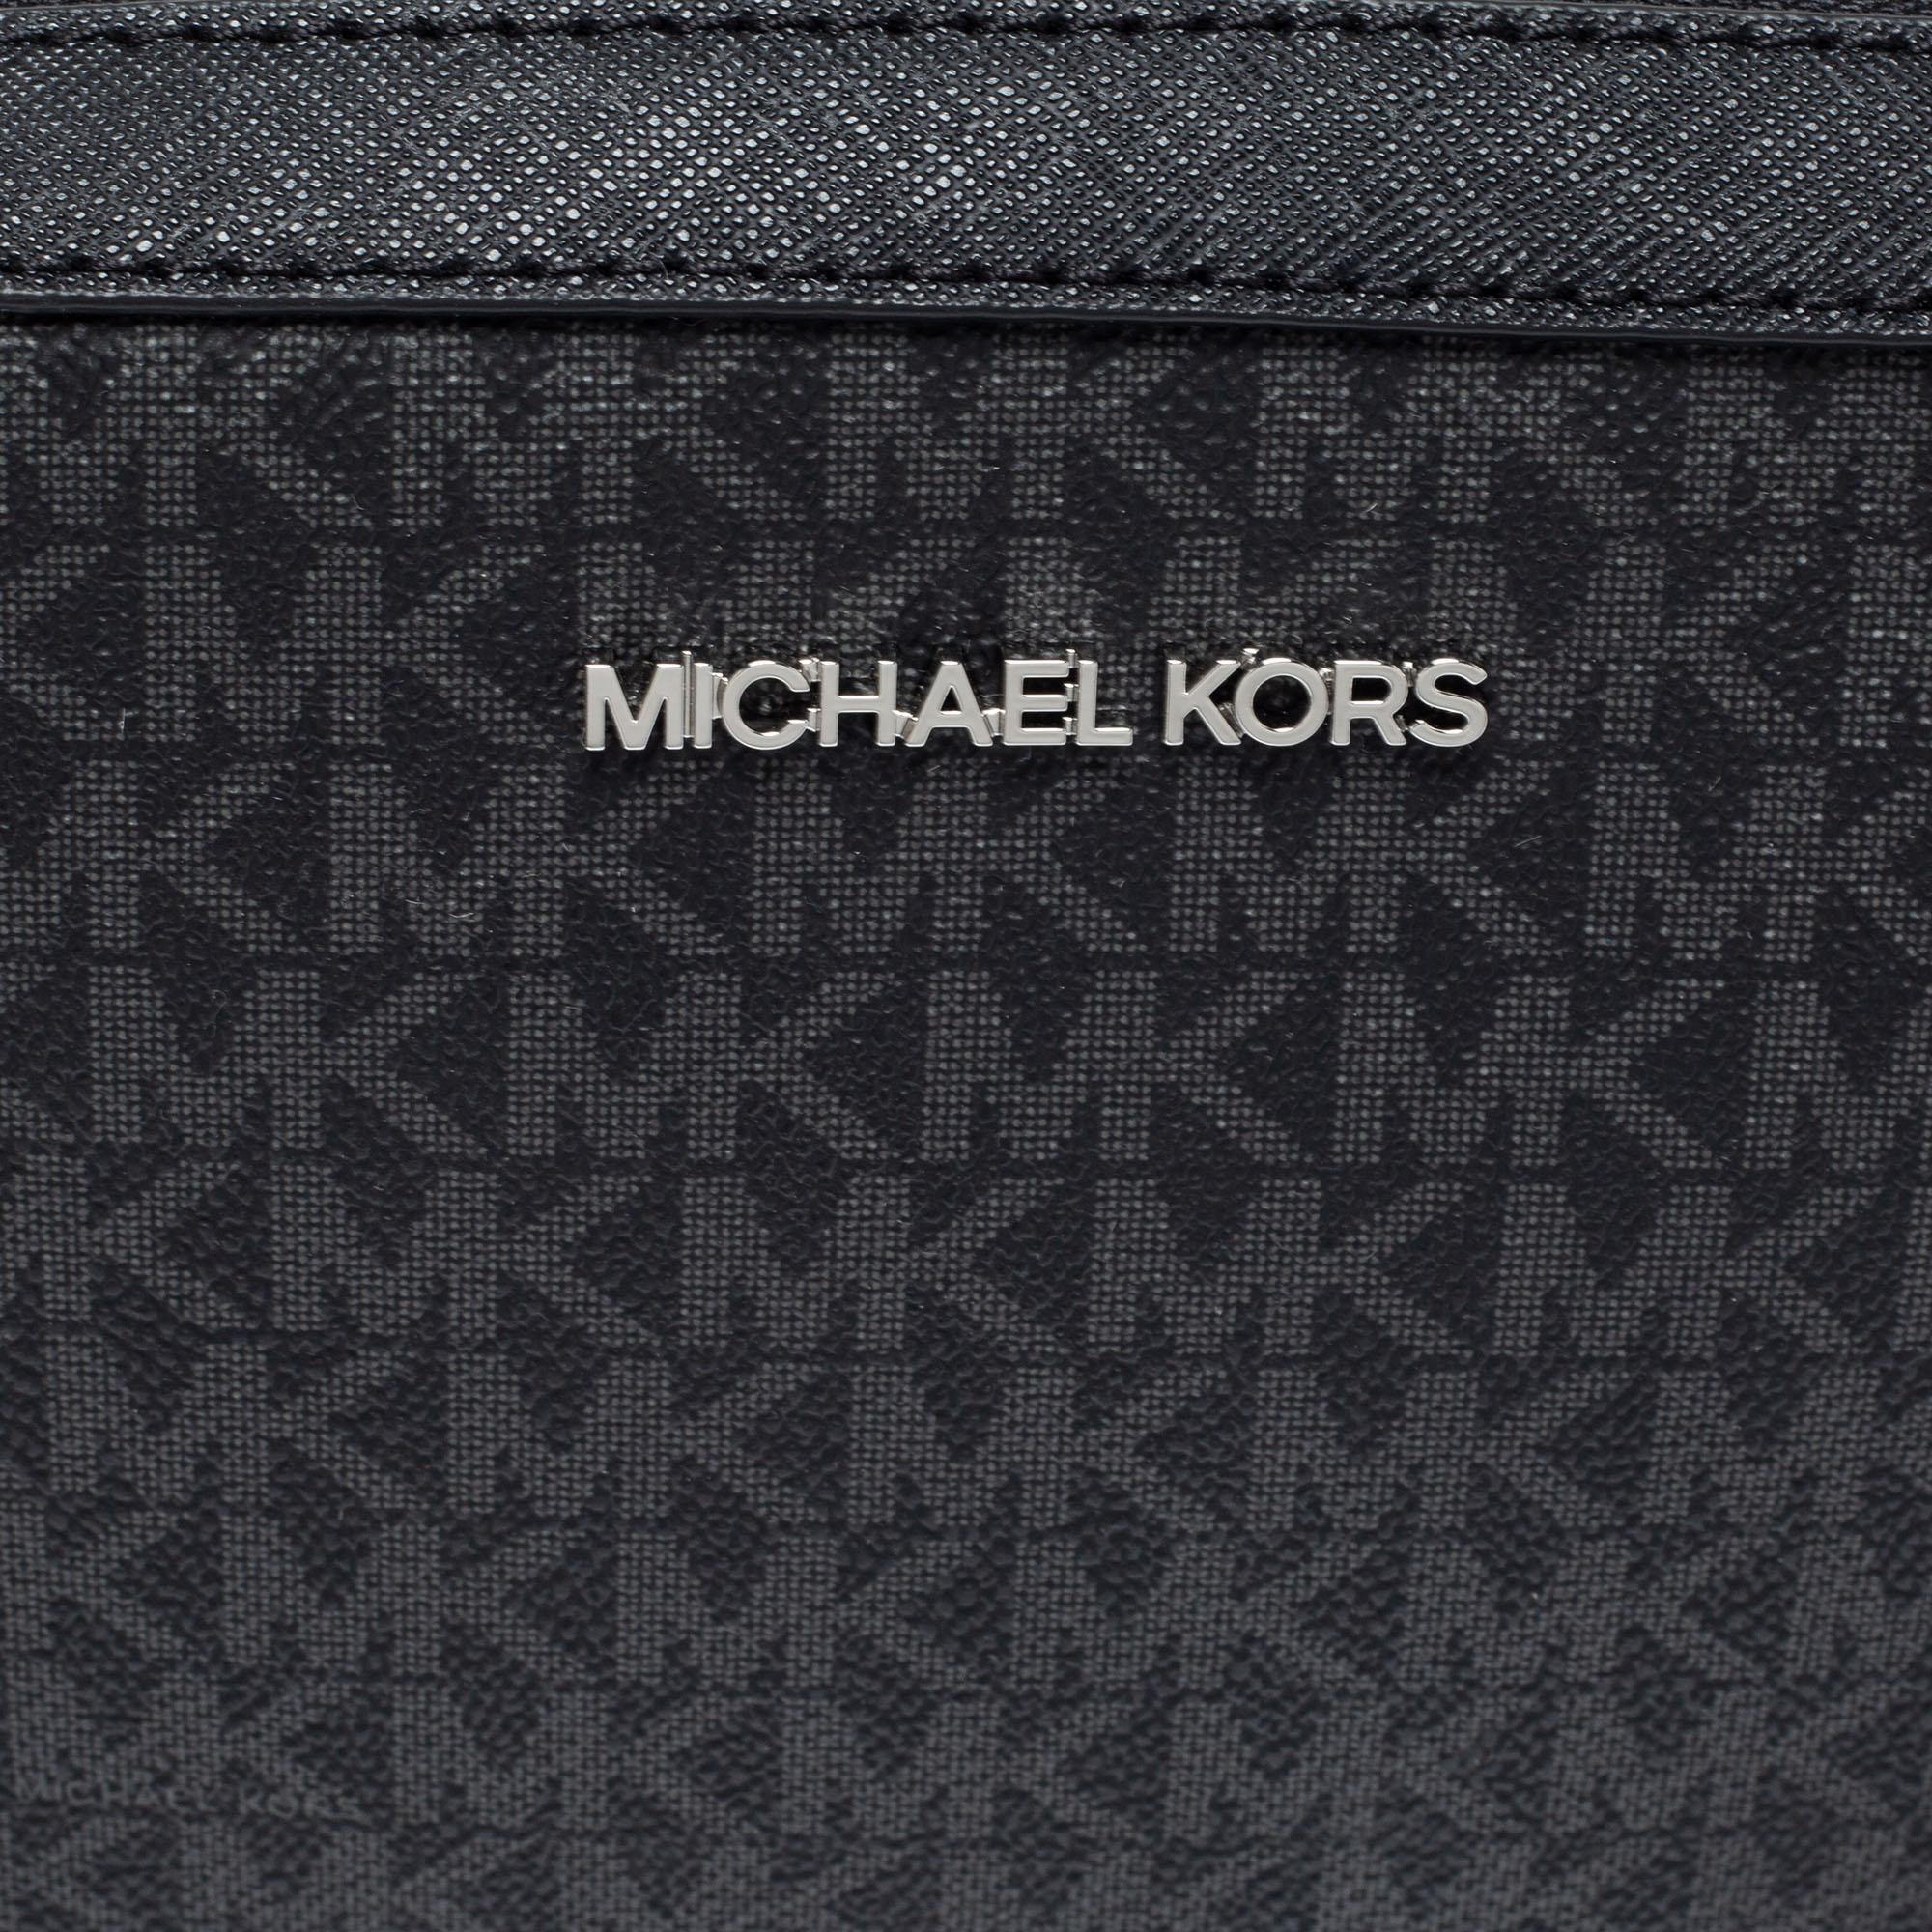 Michael Kors Black/Grey Signature Coated Canvas Leather Jet Set Crossbody Bag 2